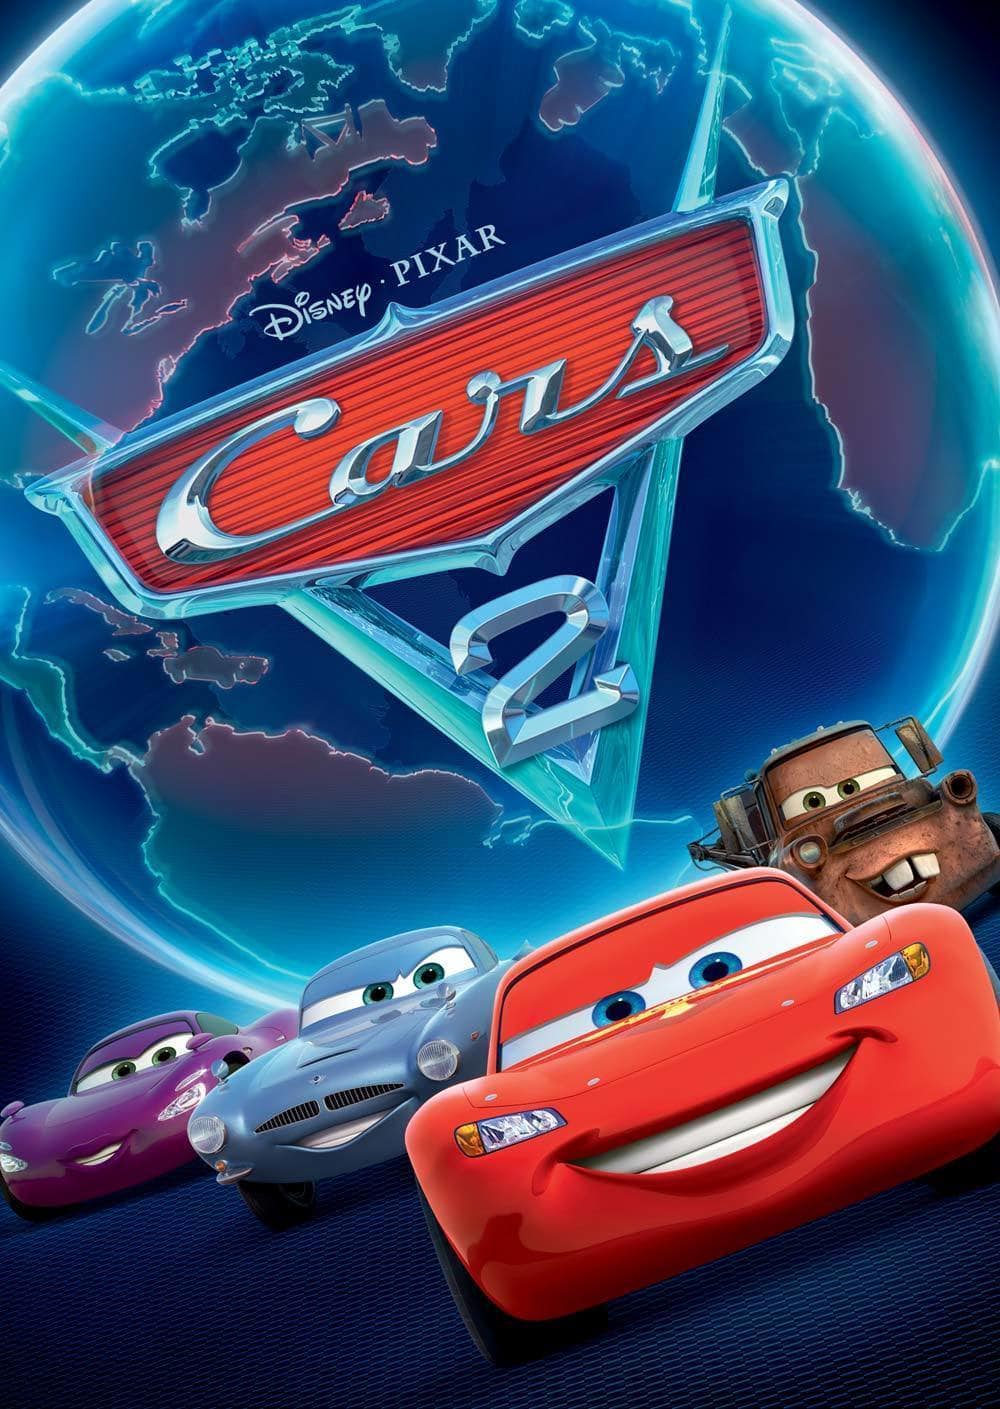 Disney Pixar Cars 2 Logo - Disney•Pixar Cars 2: The Video Game